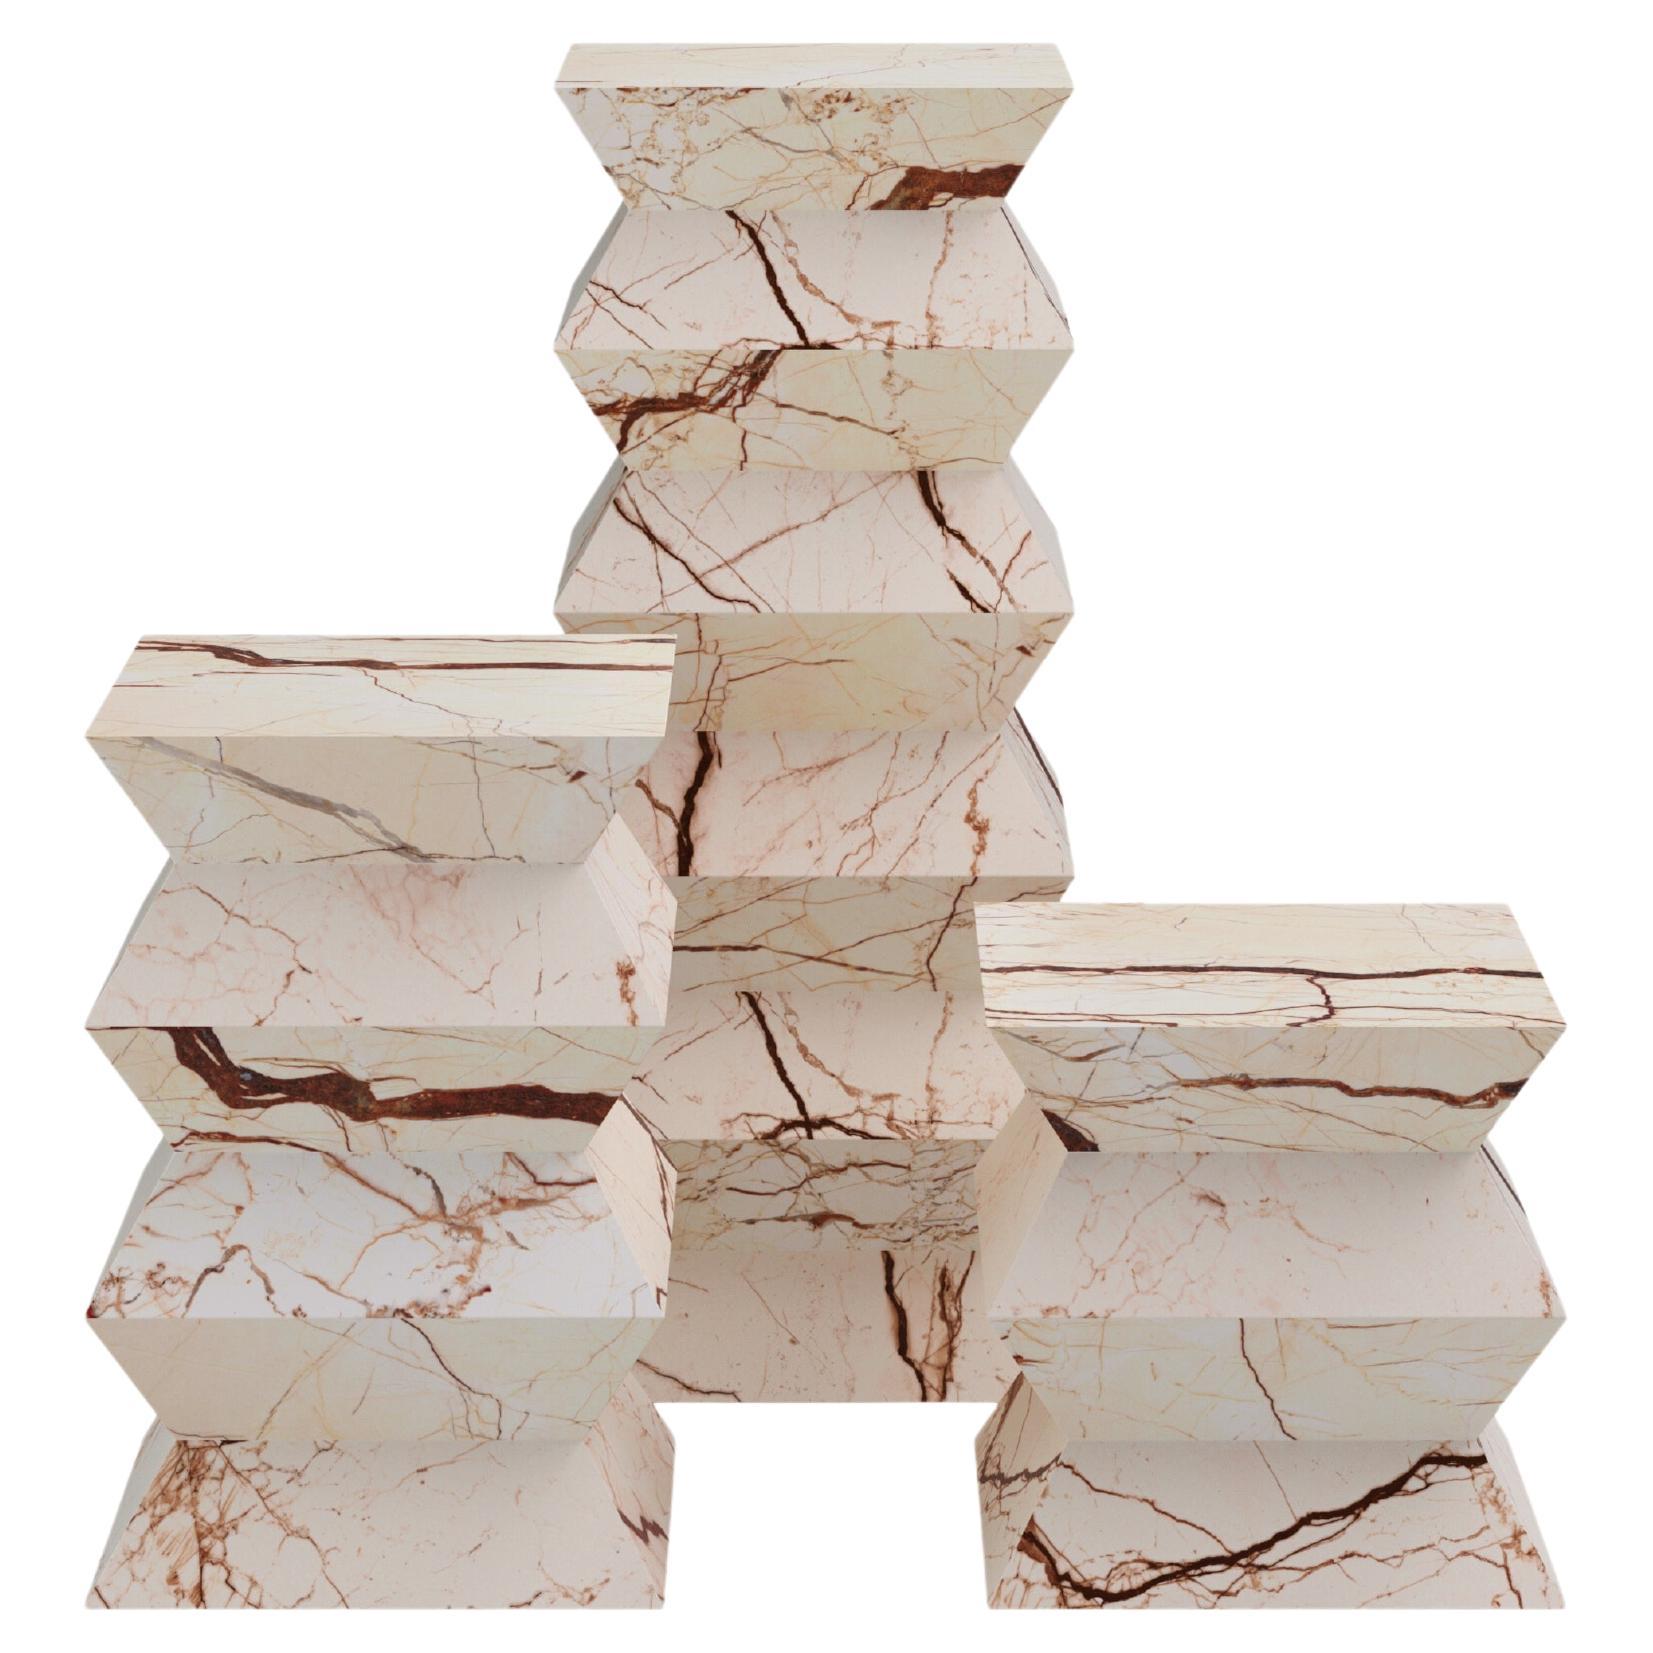 FORM(LA) Grinza Pedestal 16"L x 16"W x 16"H Sofita Beige Marble For Sale